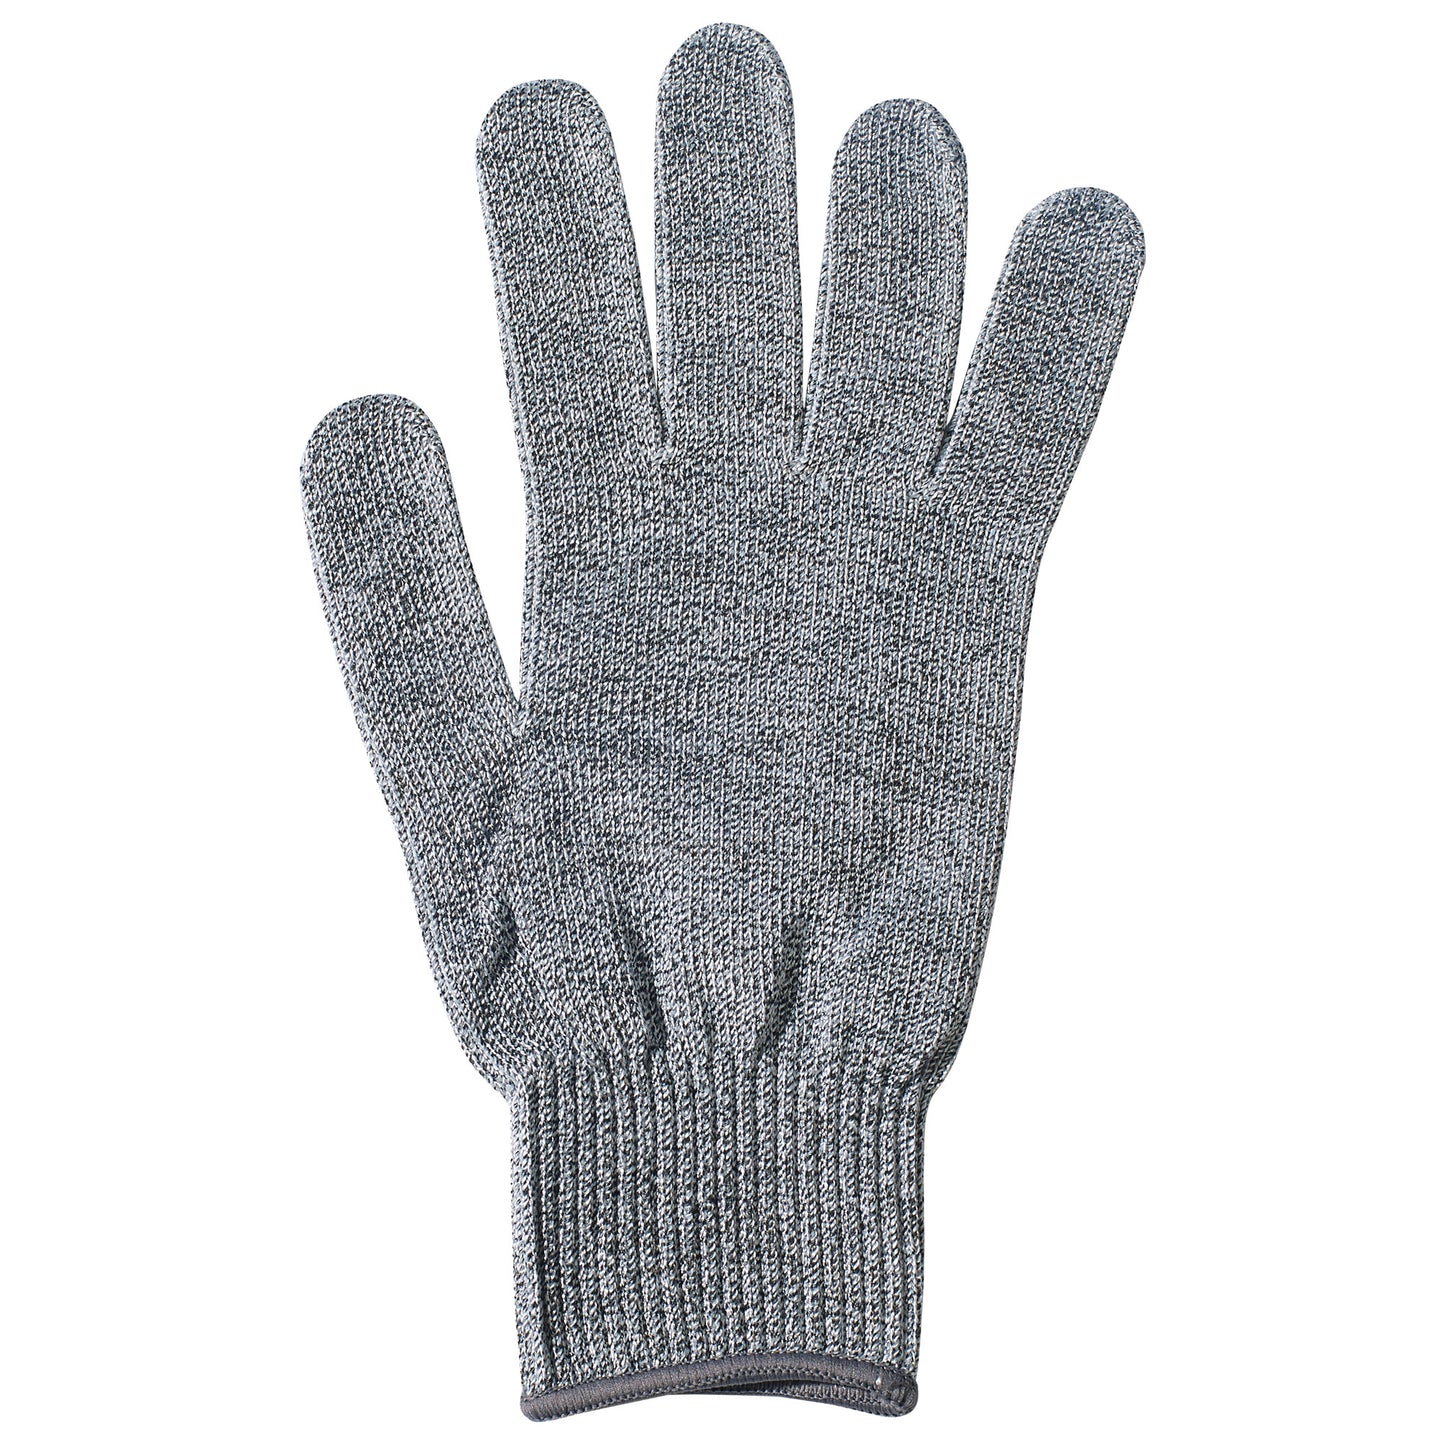 GCRA-L - Anti-Microbial Cut Resistant Glove - Large